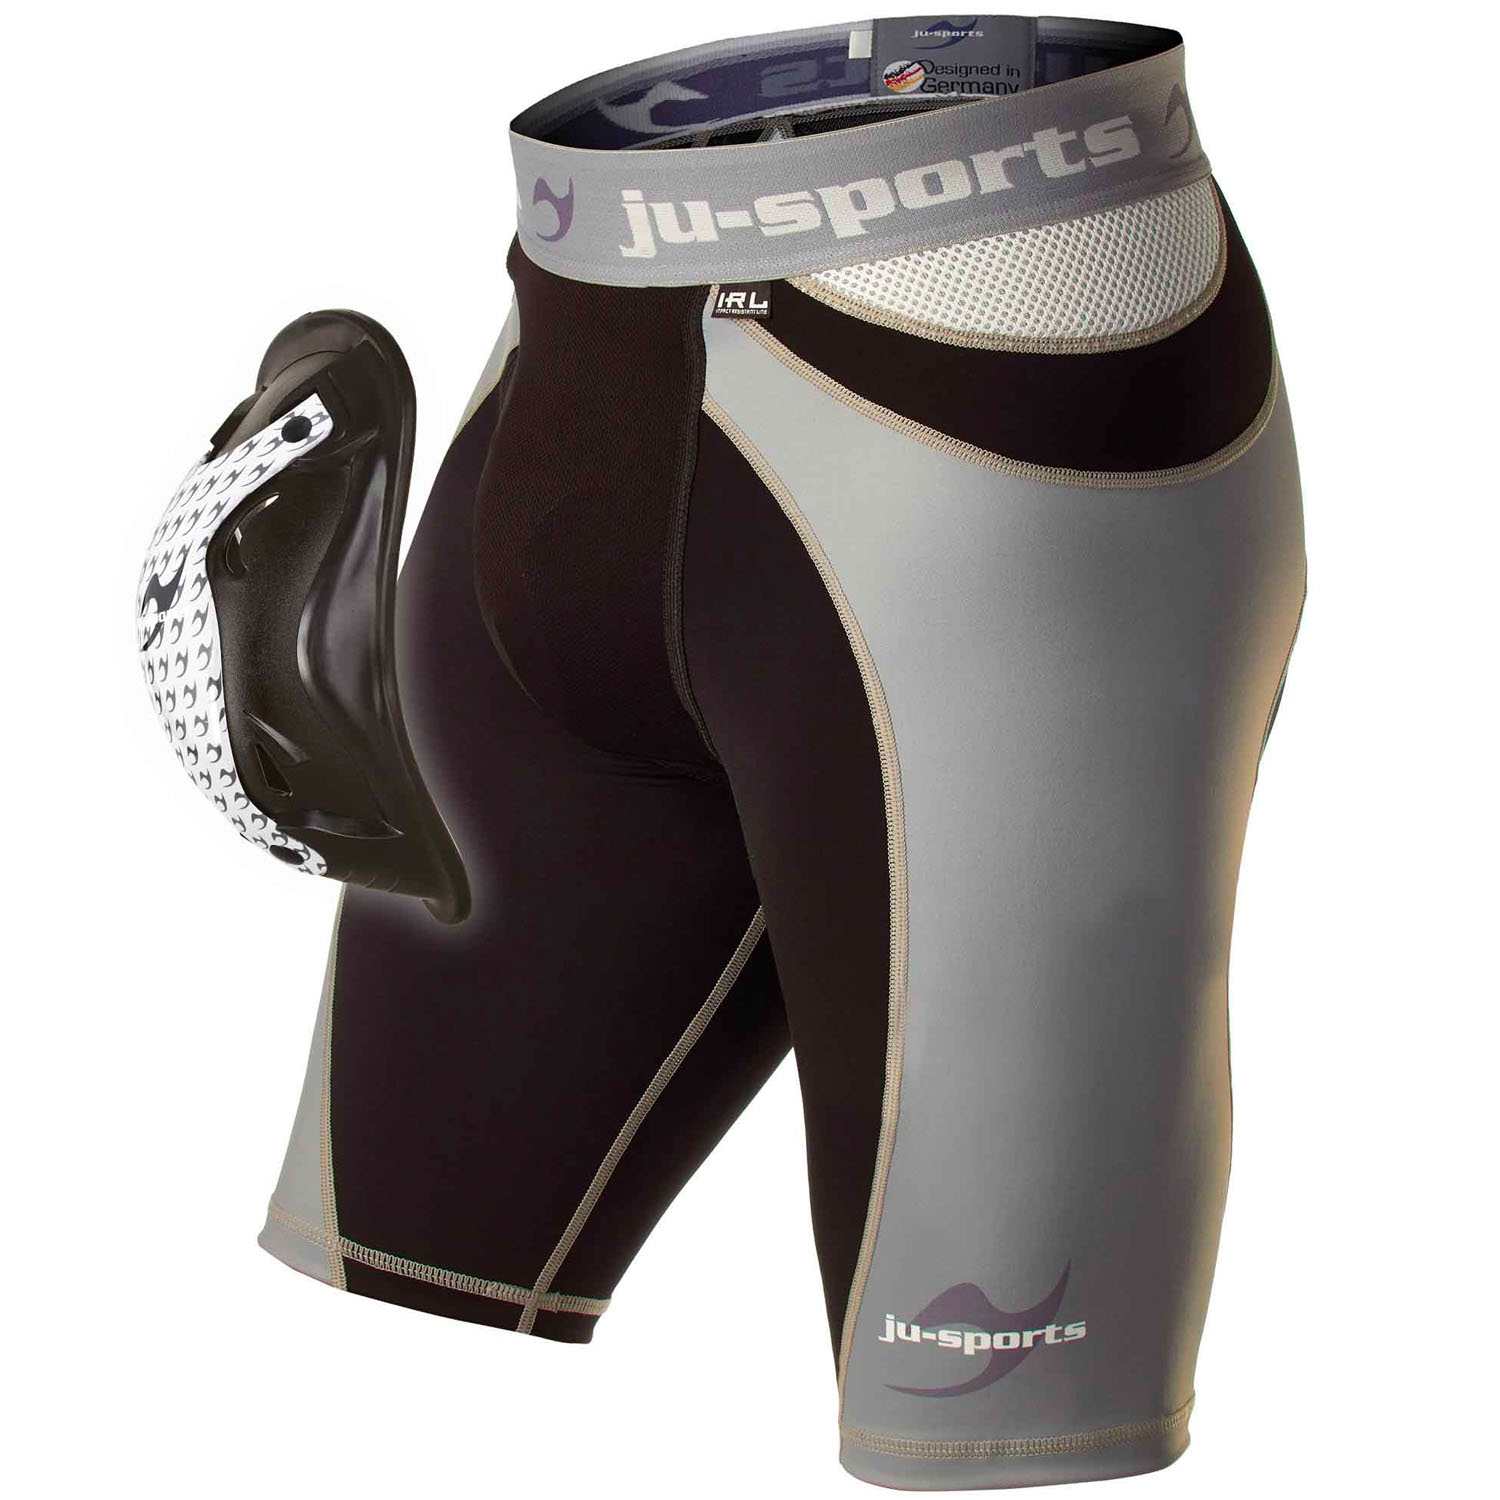 Ju-Sports Compression Shorts, Pro Line Motion Pro Flexcup, XXL